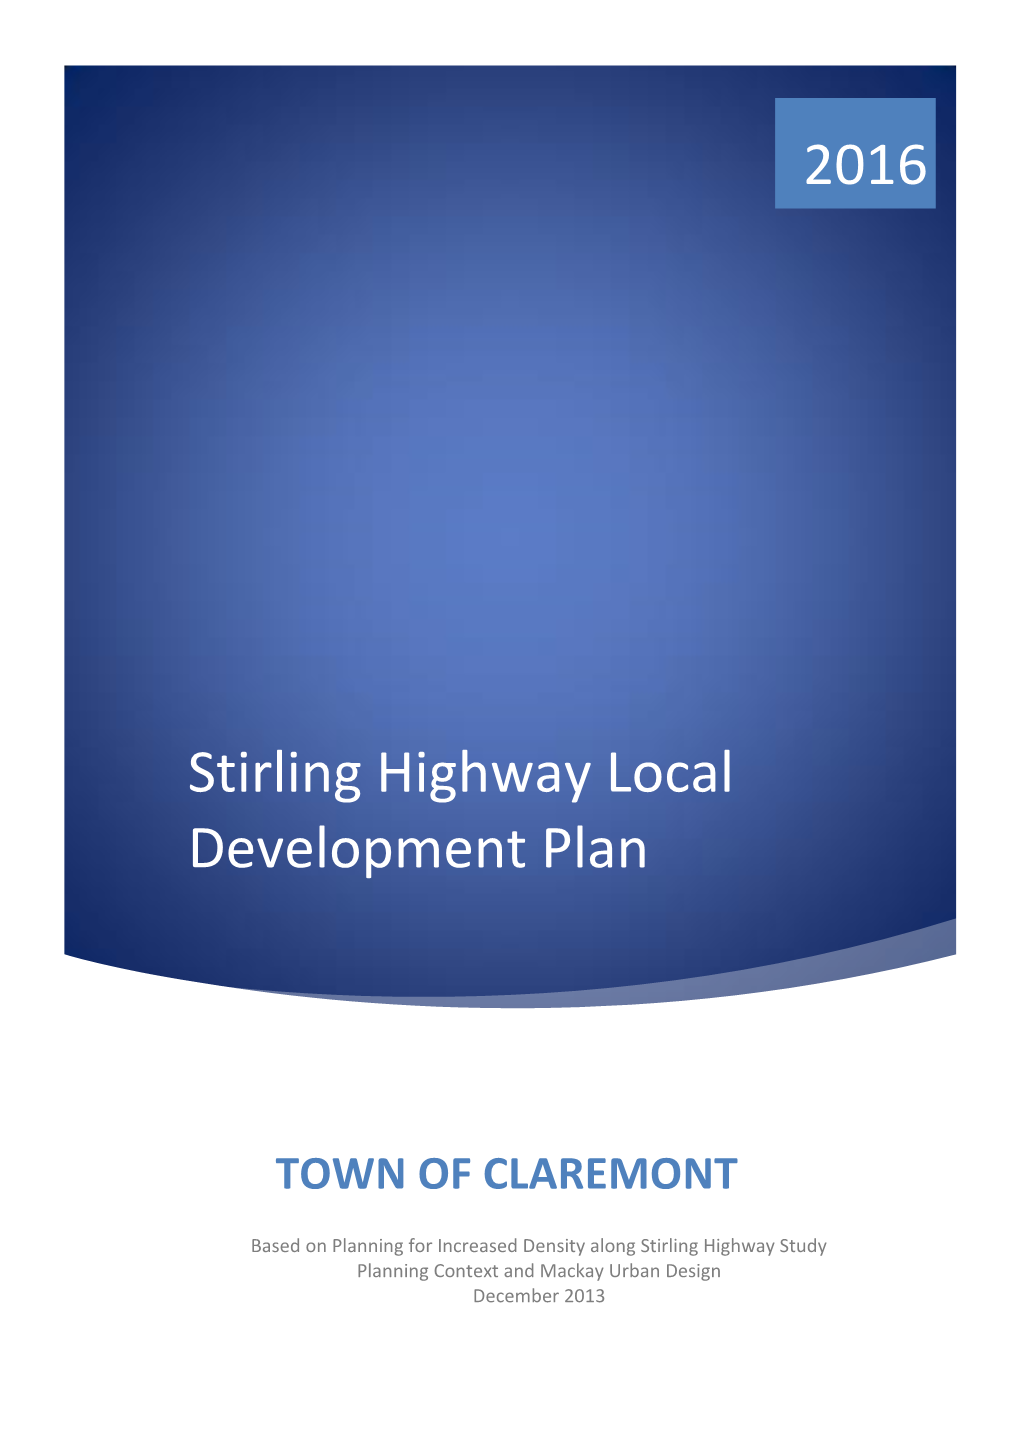 Stirling Highway Local Development Plan 2016